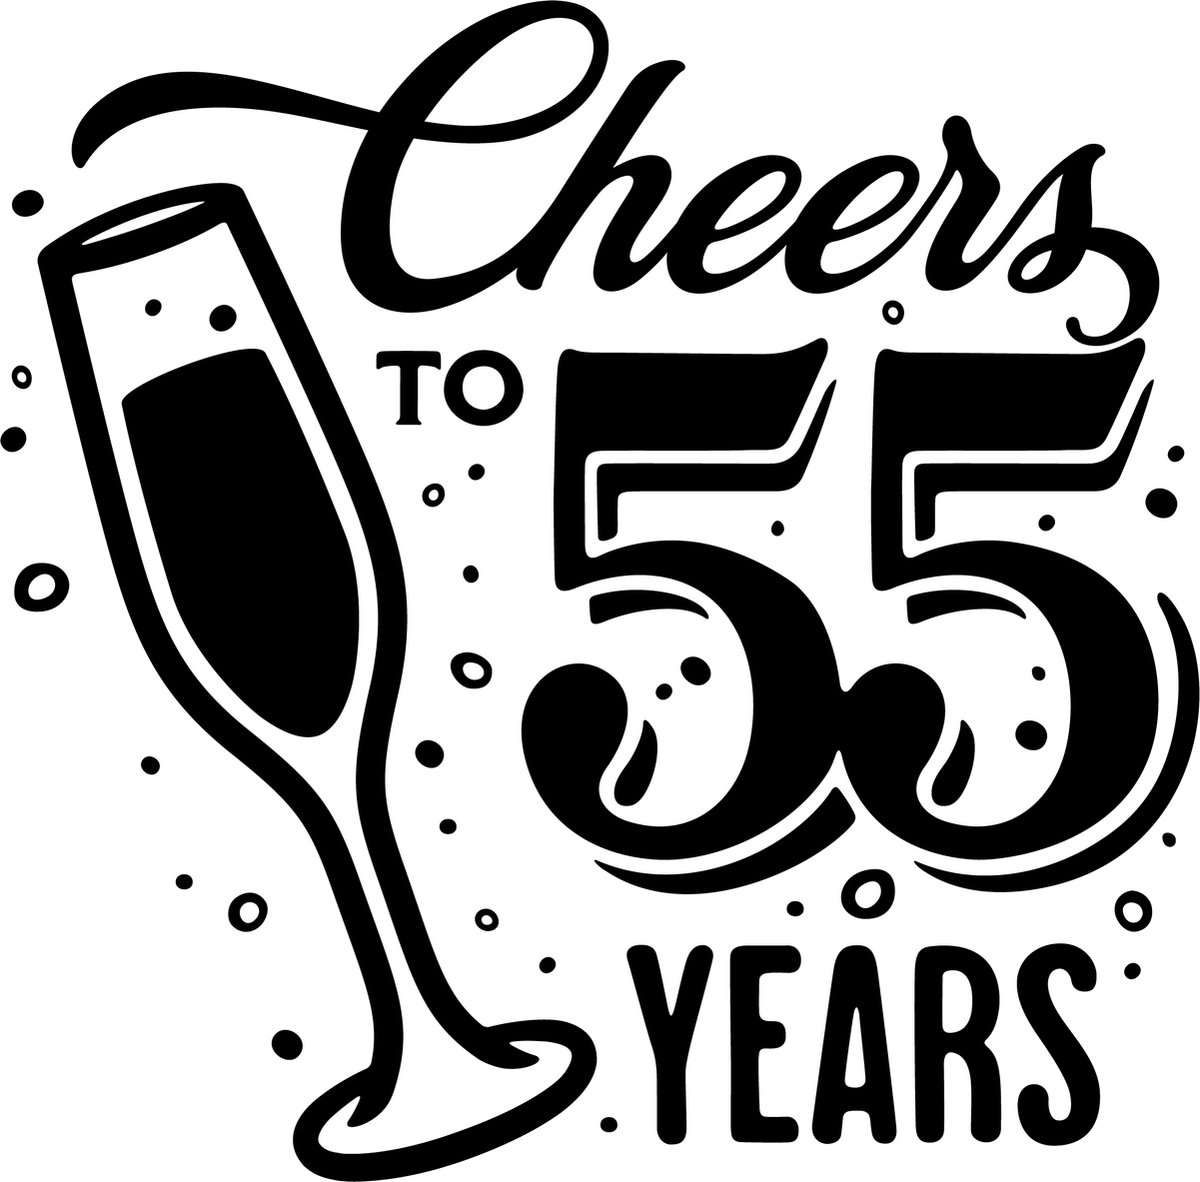 Sticker - Cheers to 55 years - 20x20cm - wit - 1 stuks - stickers - verjaardag - verjaardag decoratie - verjaardag versiering - feest - feest versiering - feestartikelen - raamstickers - raamsticker - Stickers volwassenen